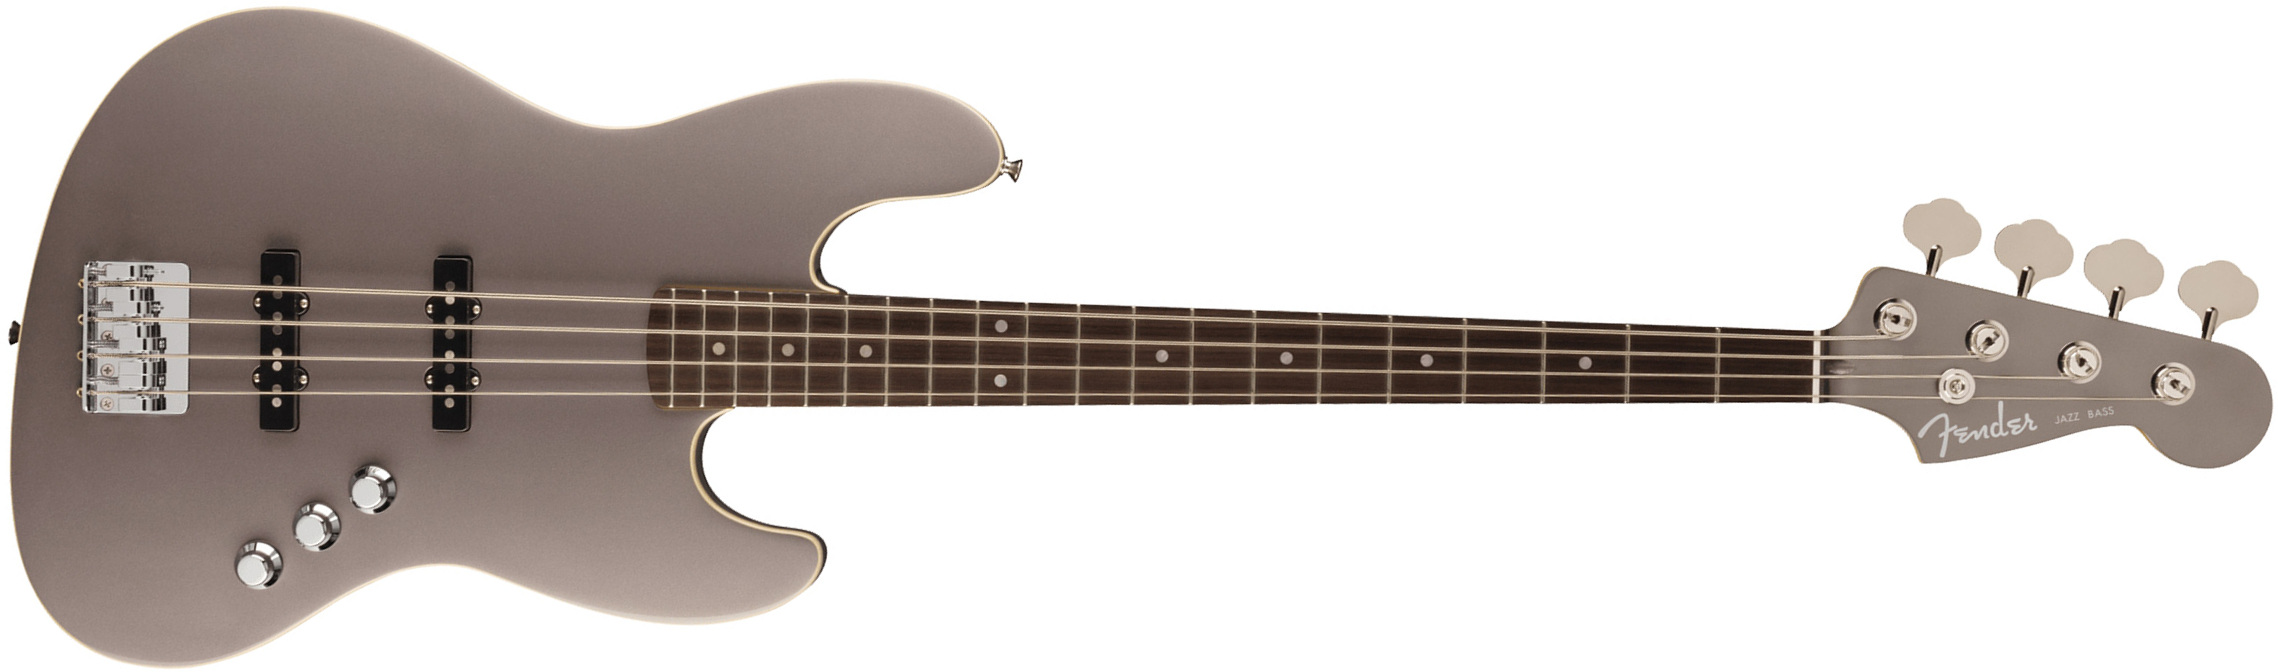 Fender Jazz Bass Aerodyne Special Jap Rw - Dolphin Gray Metallic - Solidbody E-bass - Main picture